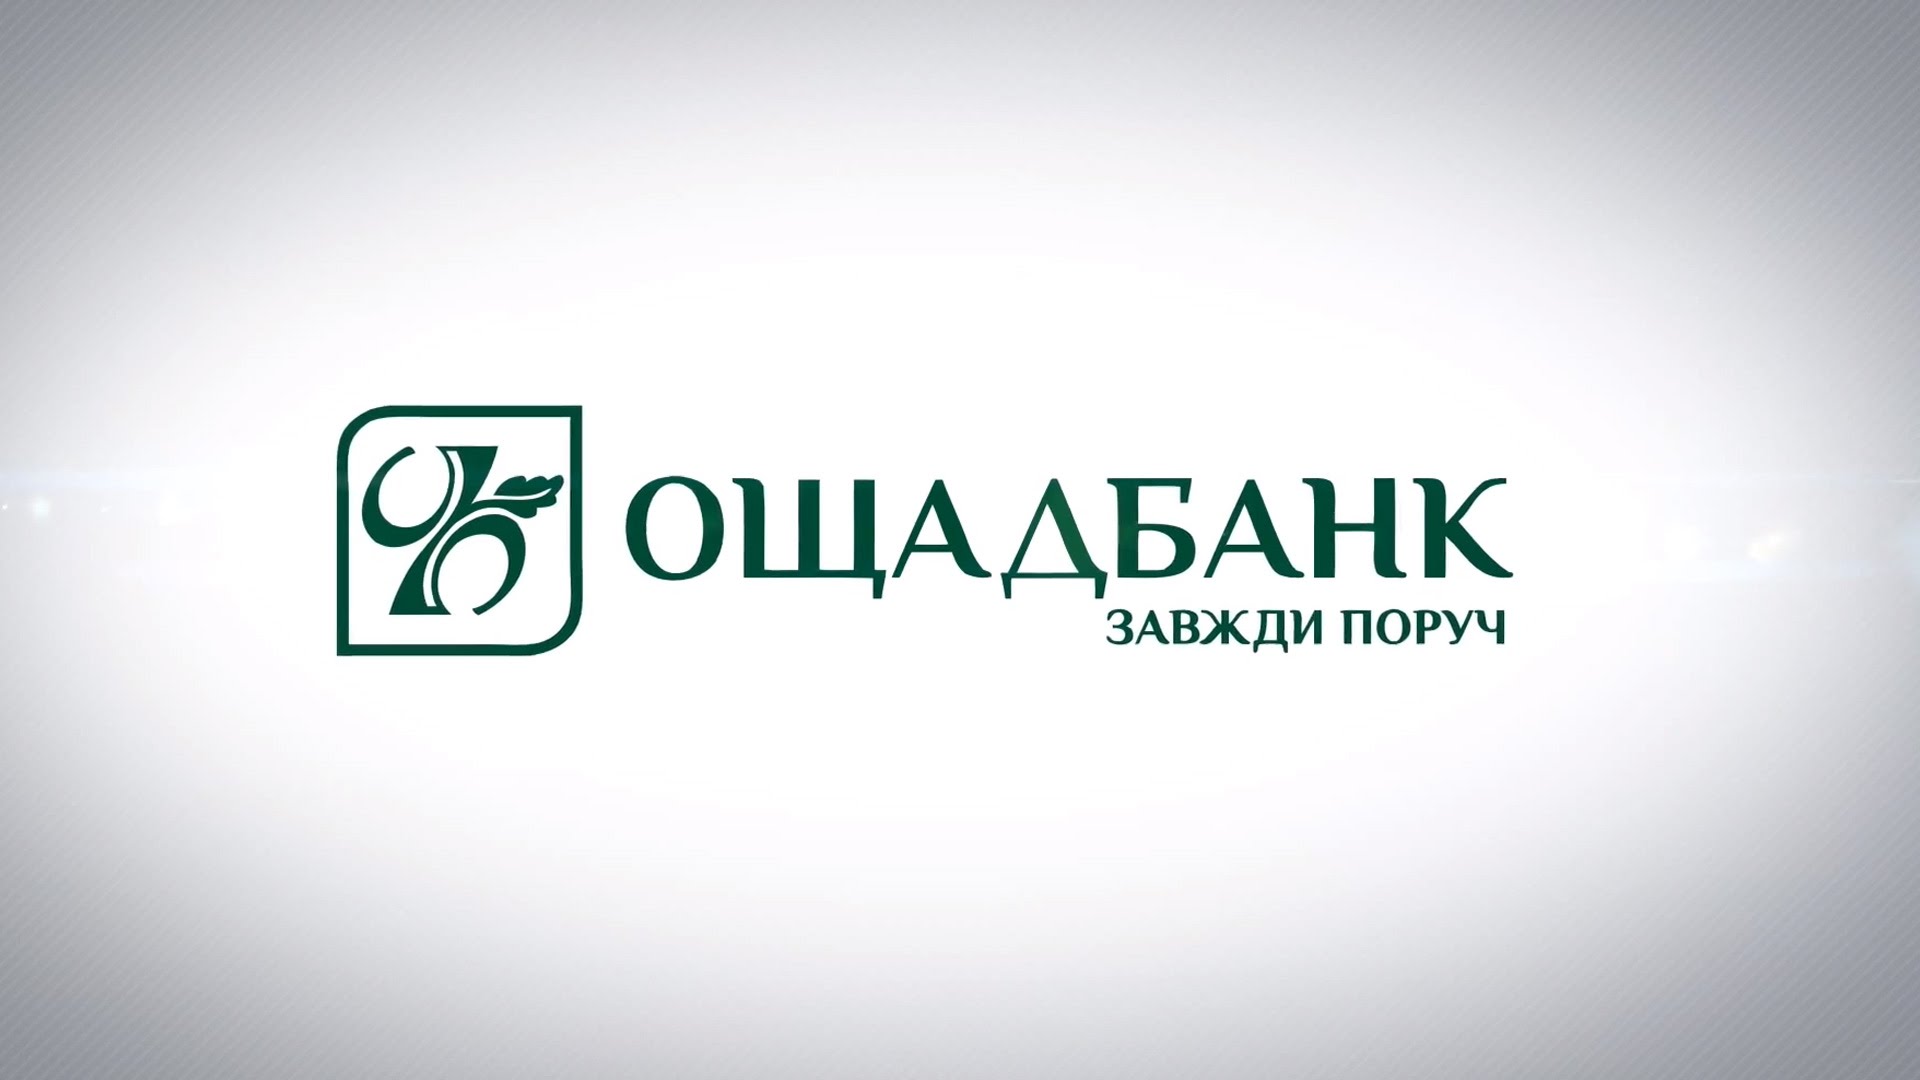 Логотип Ощадбанка Украины фото